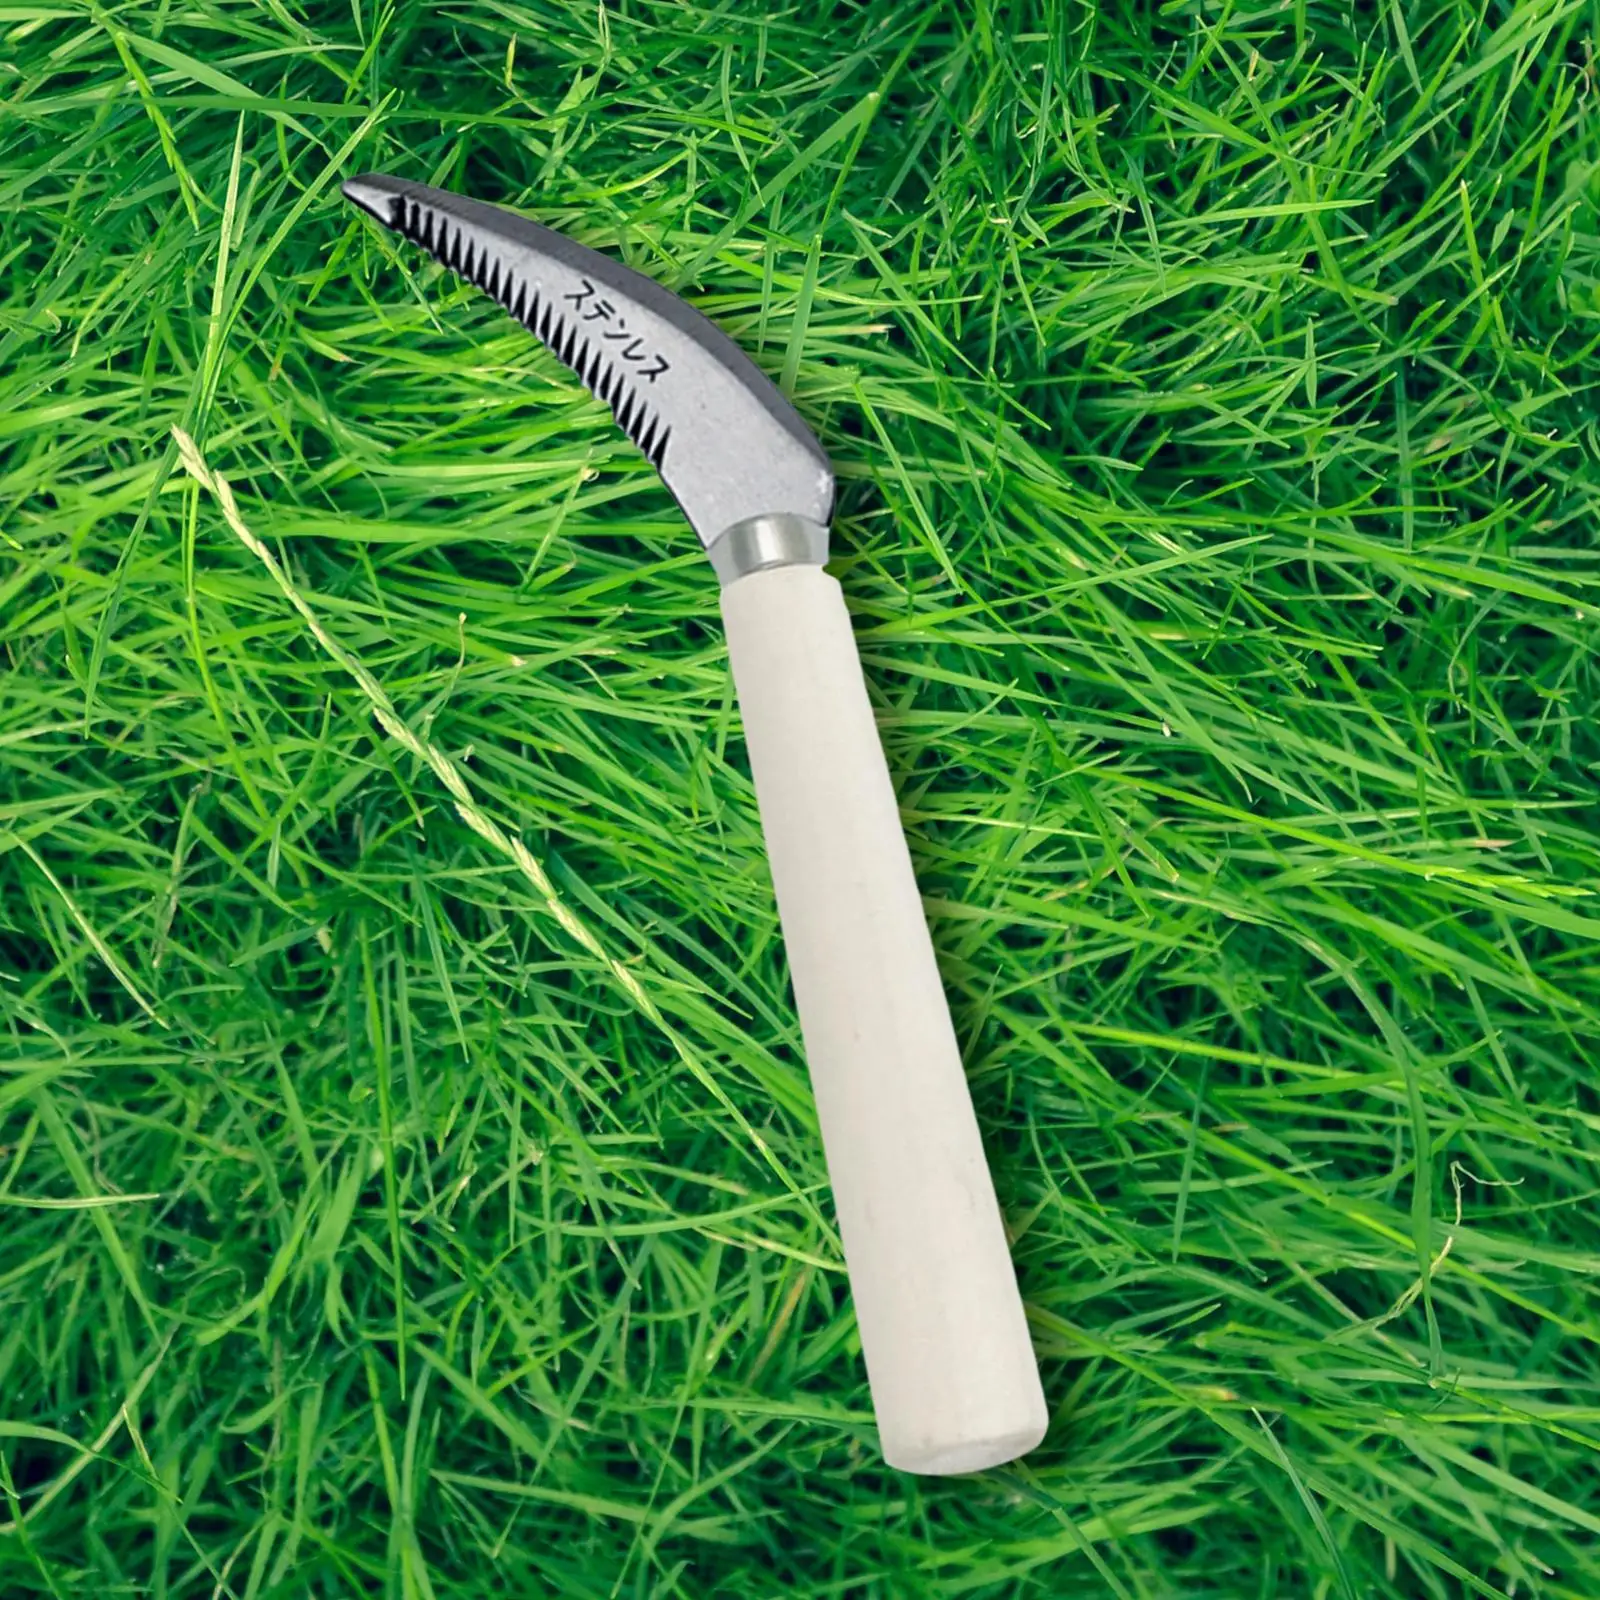 Grass Weeding Knife Weeding Removal Tool Weeding Tool Weeding Sickle with Short Handle for Gardening Terrace Paving Sidewalk